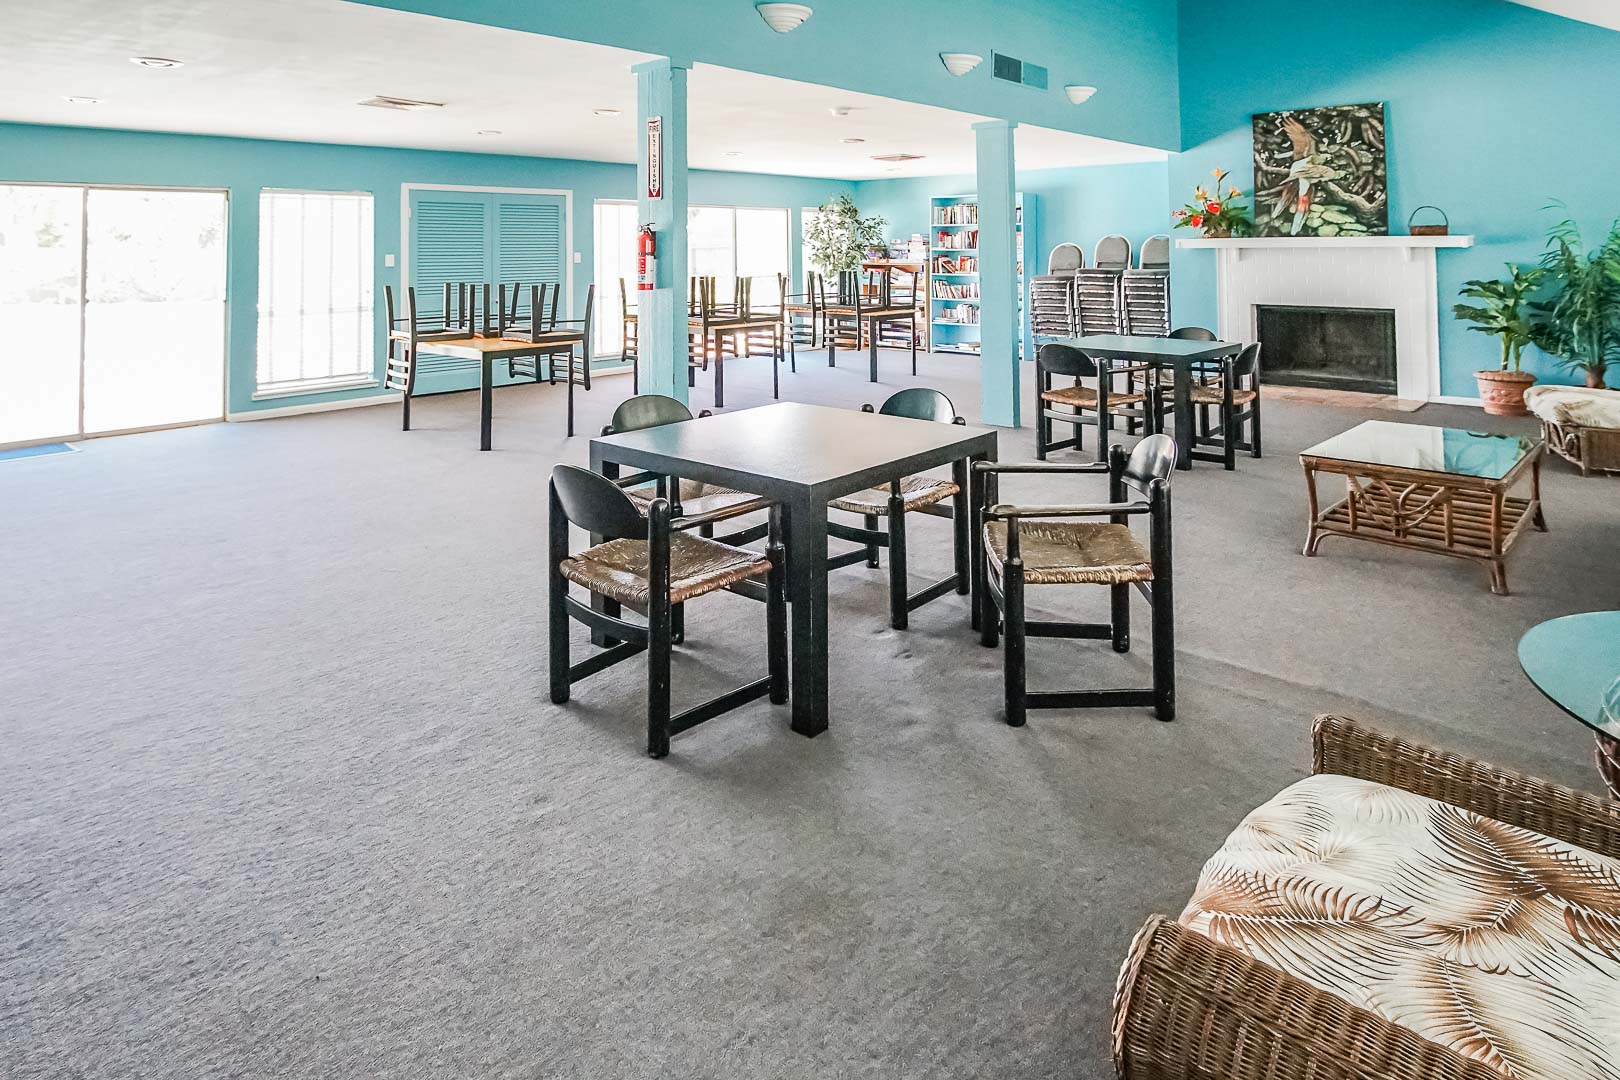 An activities center at VRI's Puente Vista Resort in Texas.